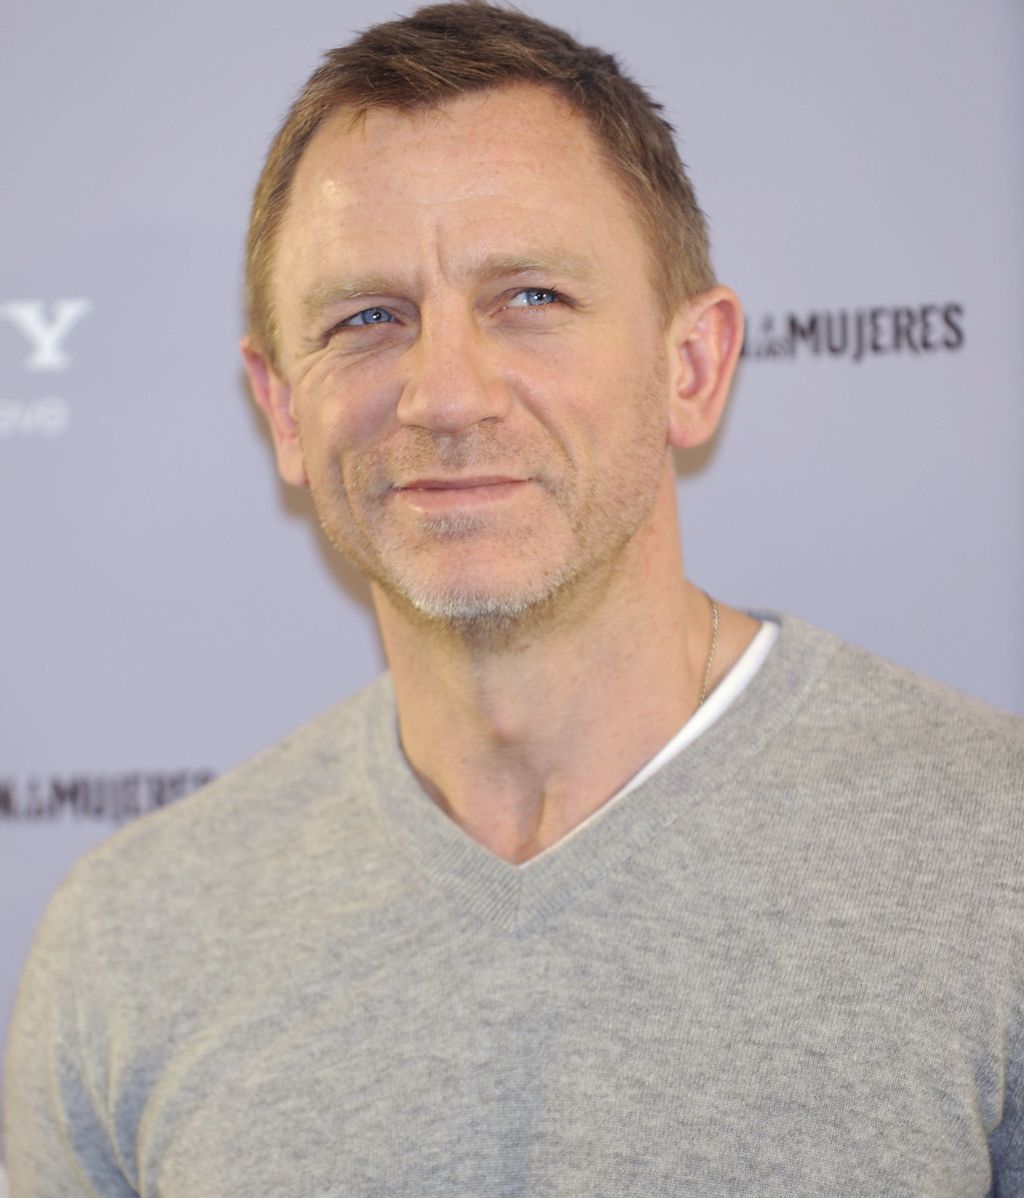 Daniel Craig presenta la última de 'Millenium' en Madrid